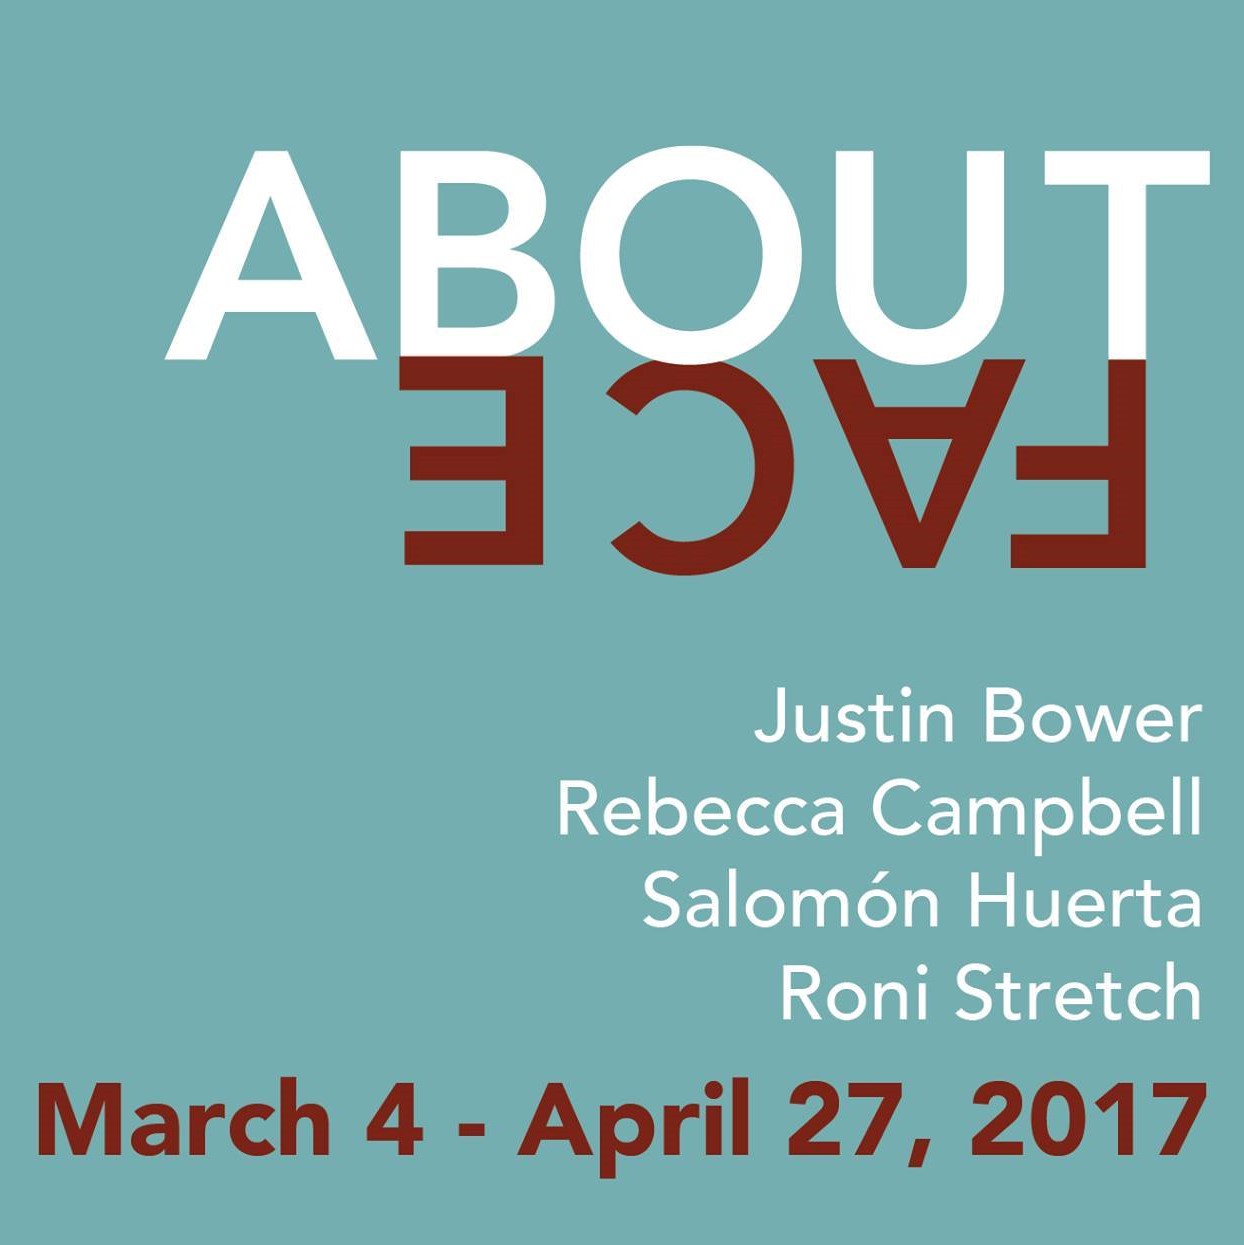 About Face: Justin Bower, Rebecca Campbell, Solomon Huerta, Roni Stretch. March 4th, April 27th 2017 